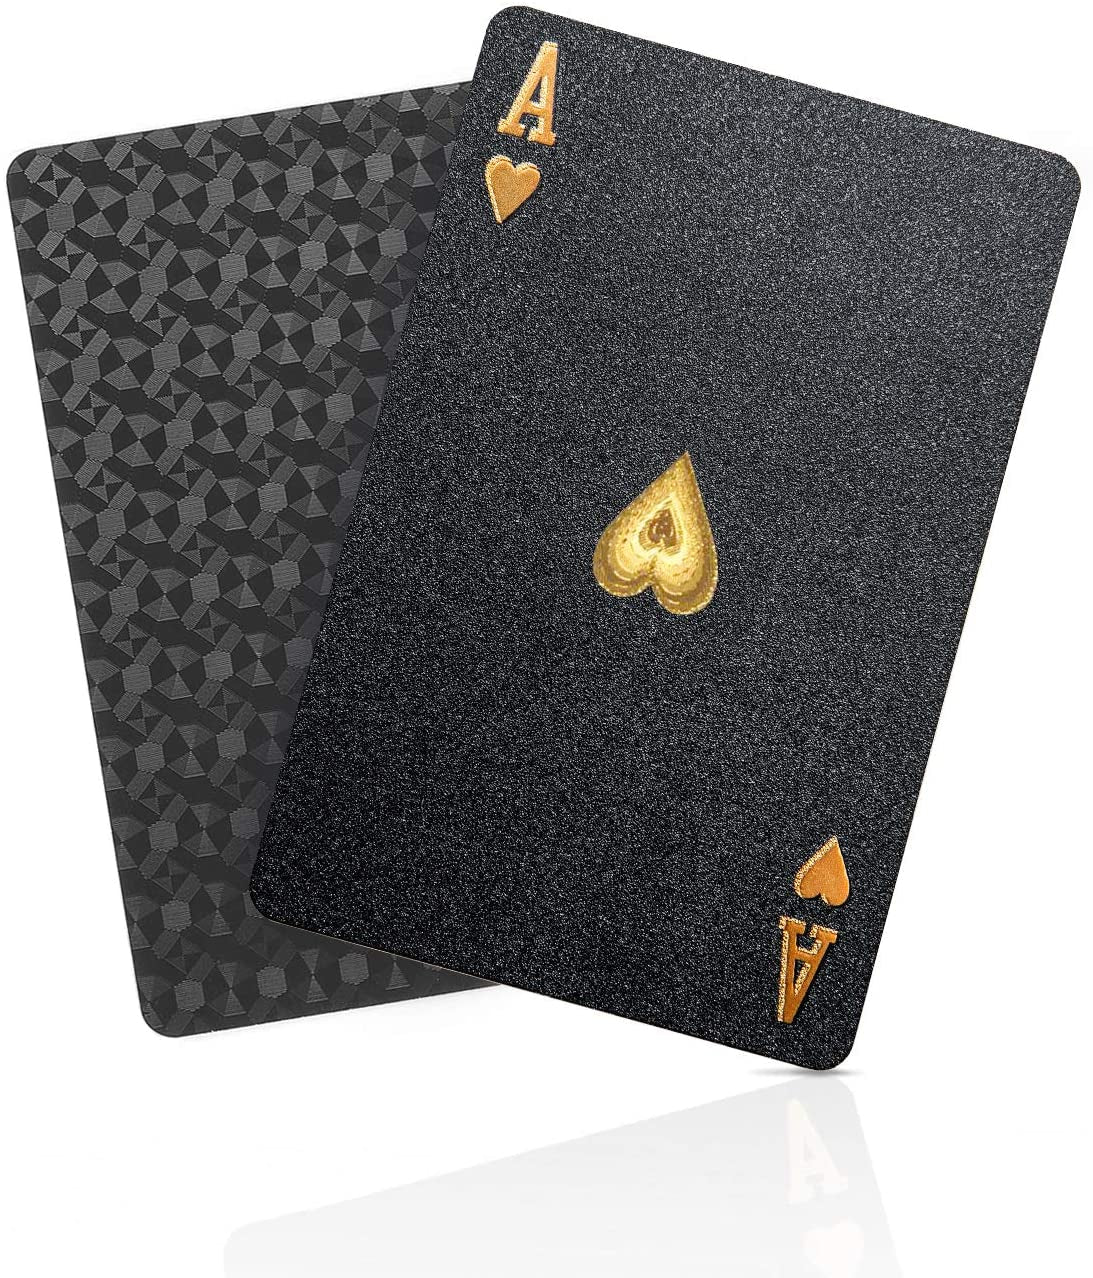 Diamond Waterproof Black Playing Cards, Poker Cards, HD, Deck of Cards (Black)